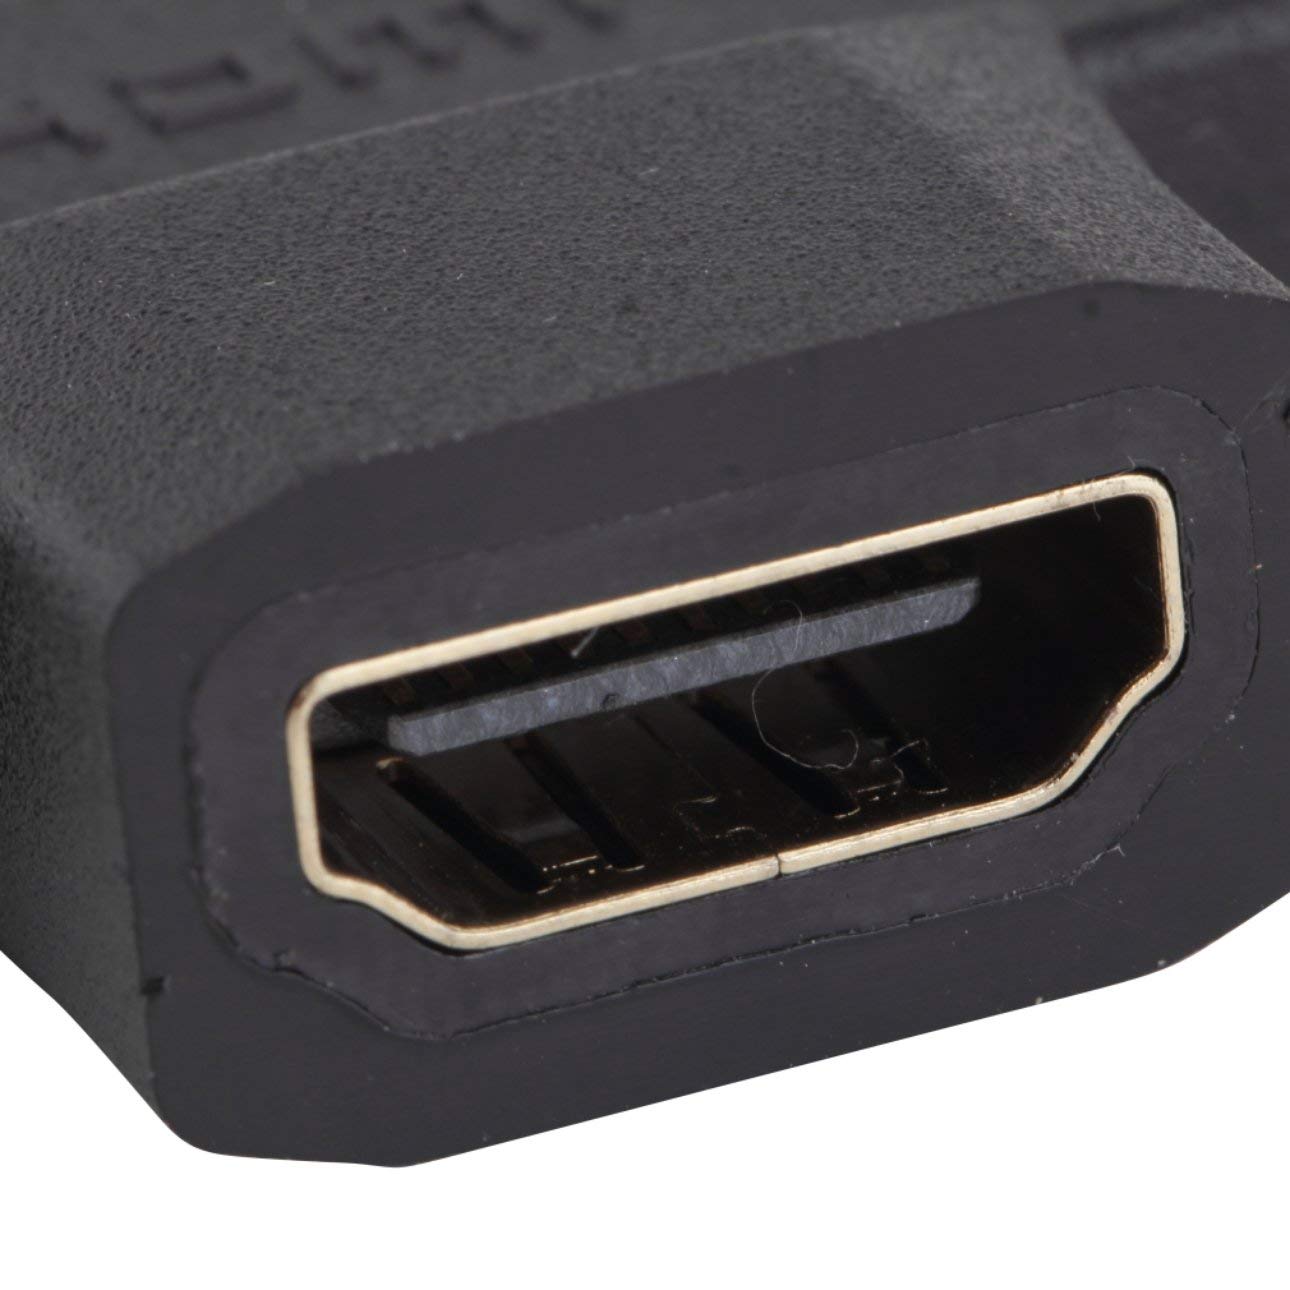 HDMI Female to Mini Micro HDMI Male V1.4 90 Degree 2 in 1 Adapter Black Gold Plated Female to Male Converter